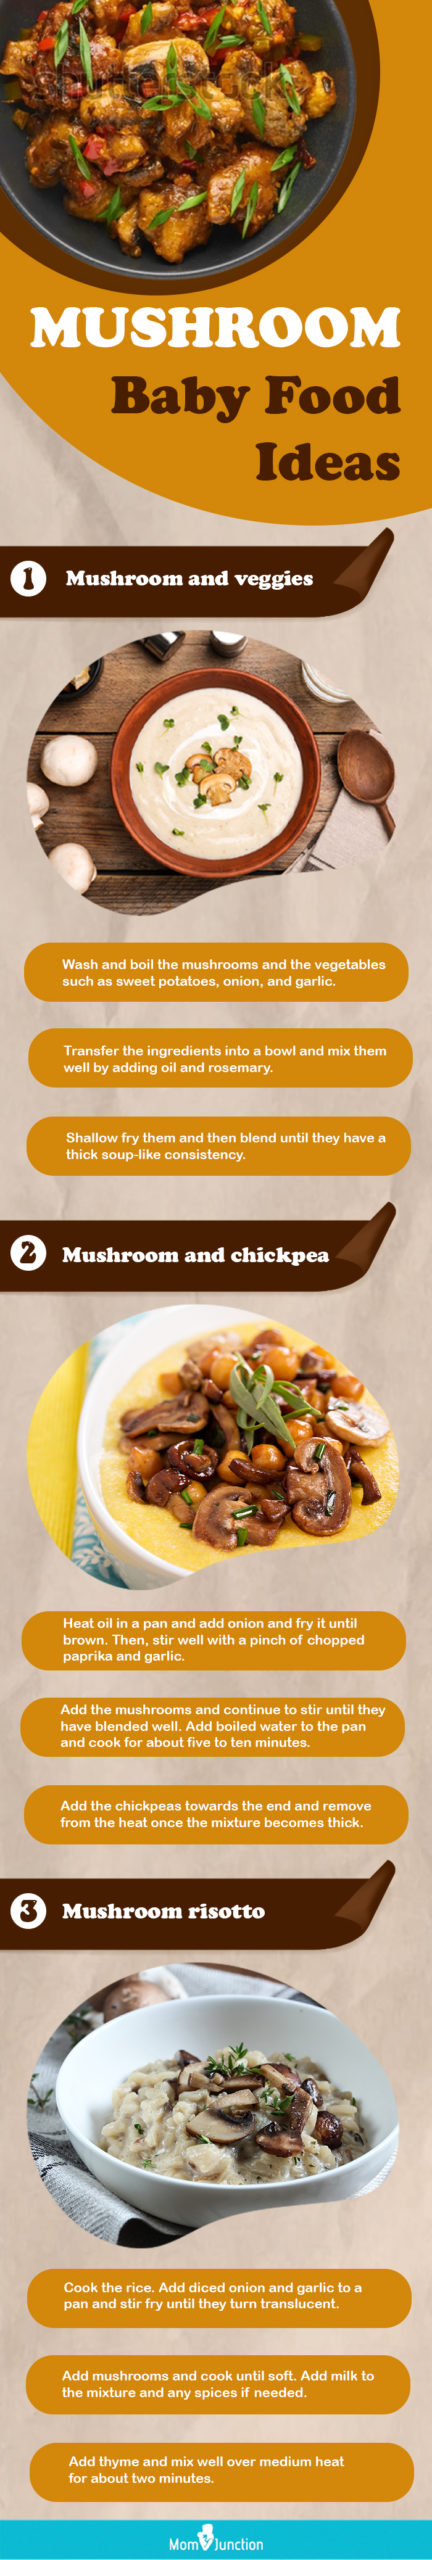 mushroom baby food ideas (infographic)